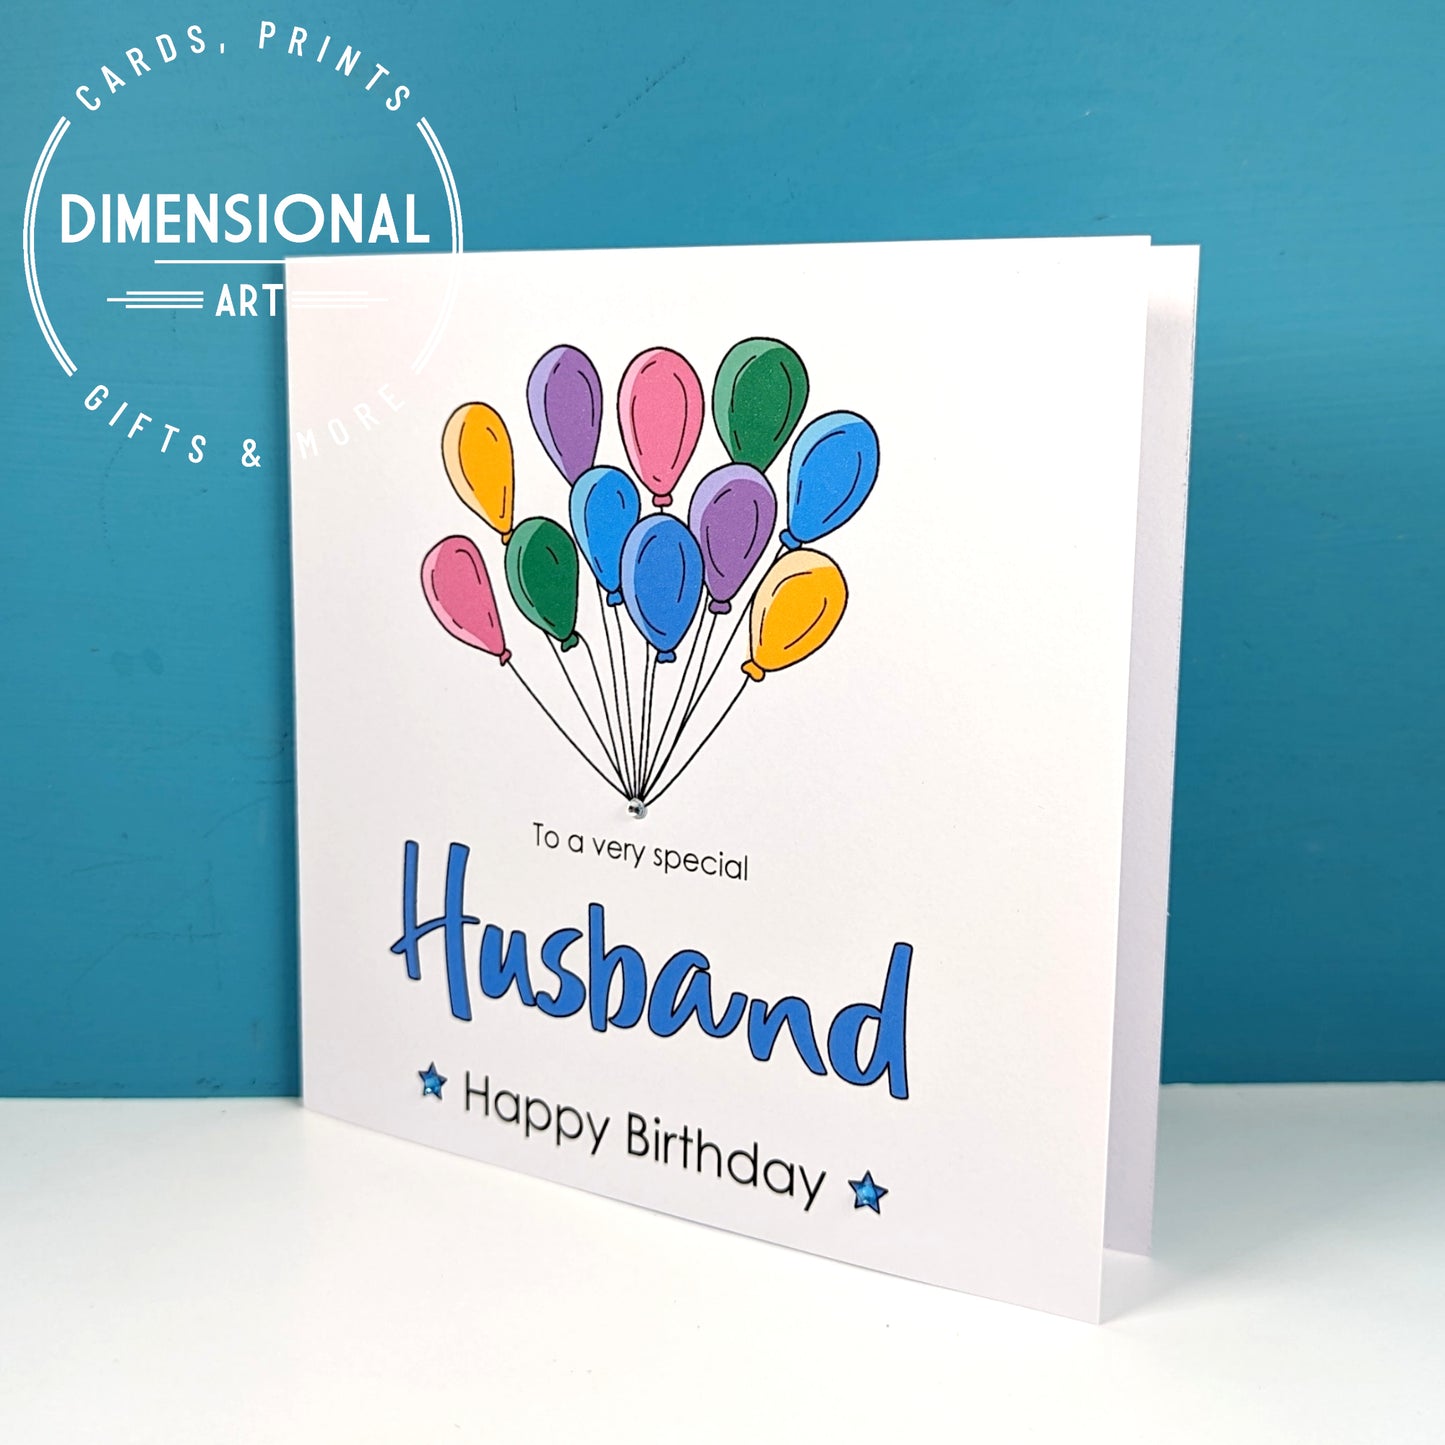 HUSBAND Birthday Card